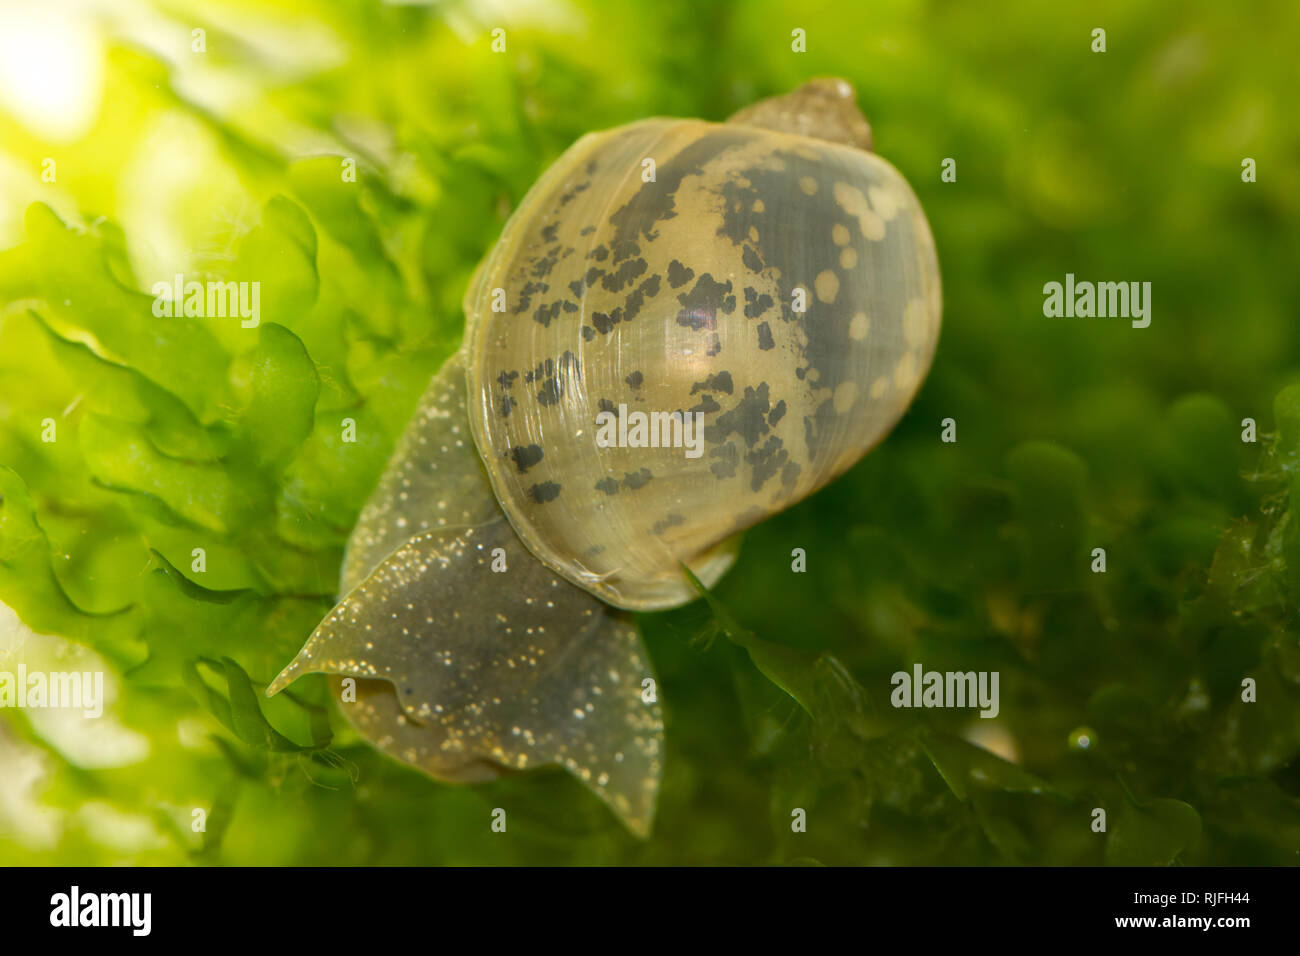 Freshwater pond snail Stock Photo